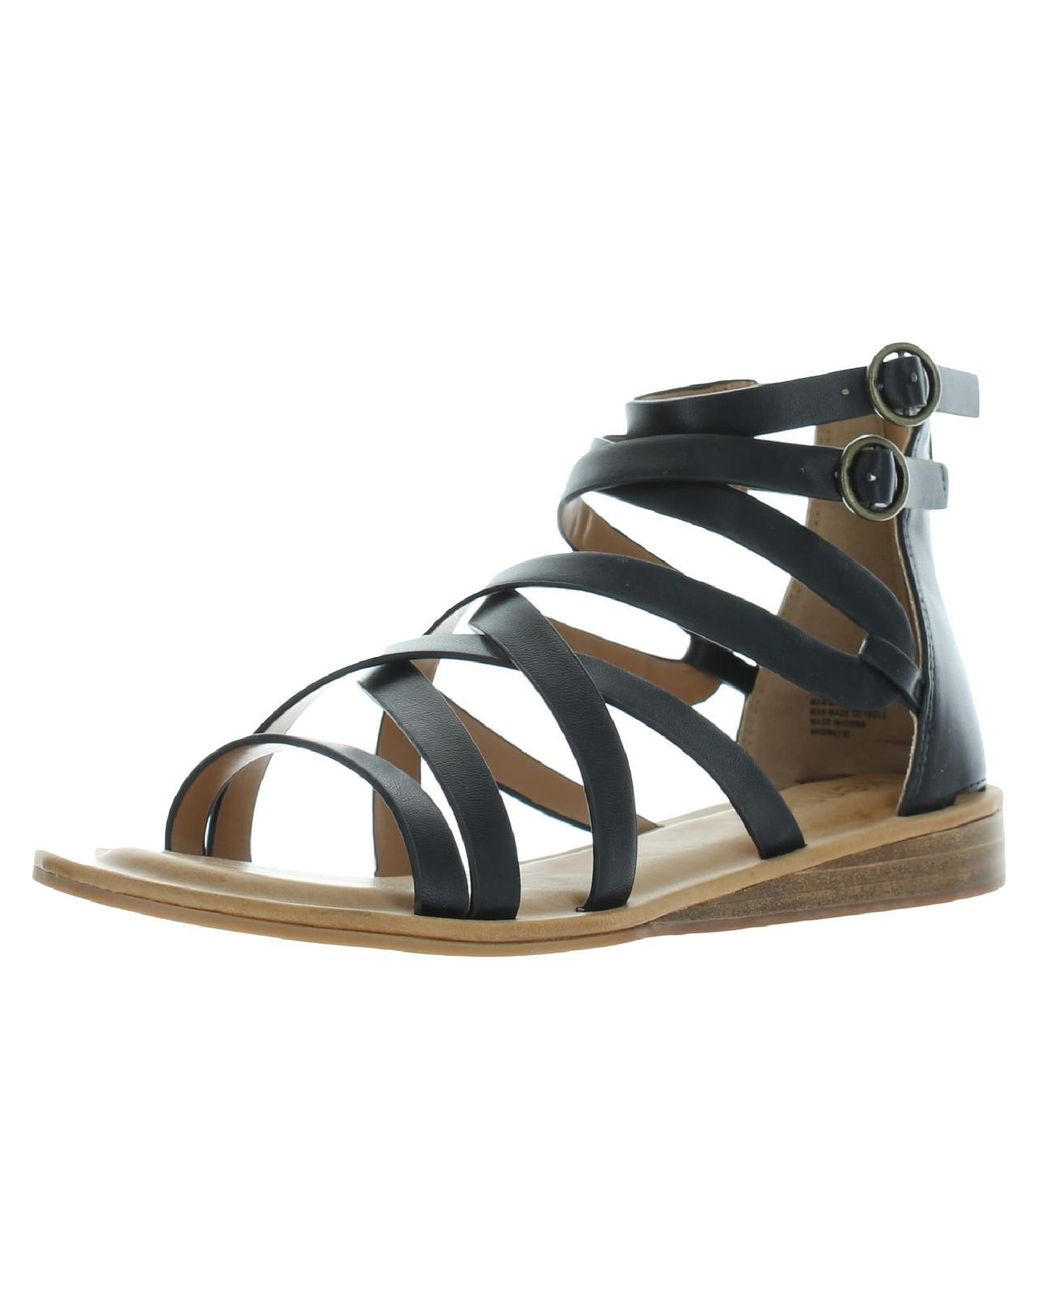 Kensie Landyn Faux Leather Strappy Gladiator Sandals in Black | Lyst